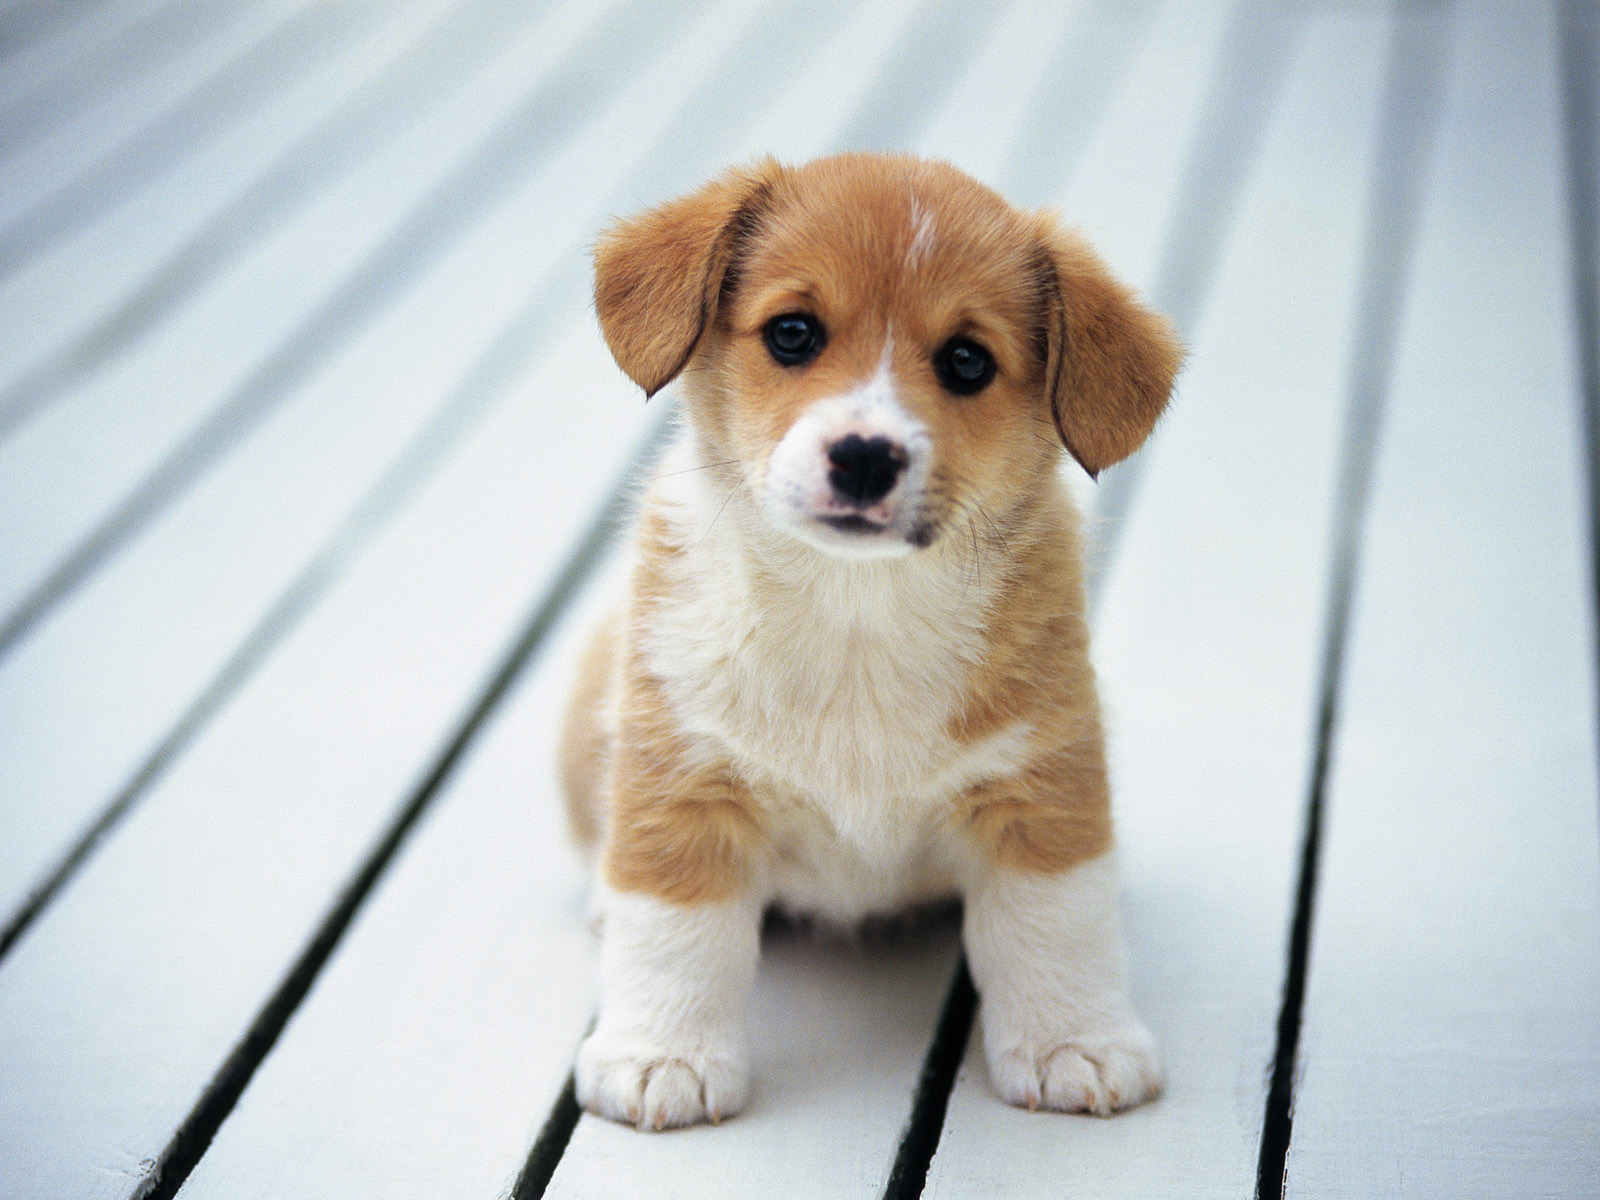 So-cute-puppies-14749028-1600-1200.jpg